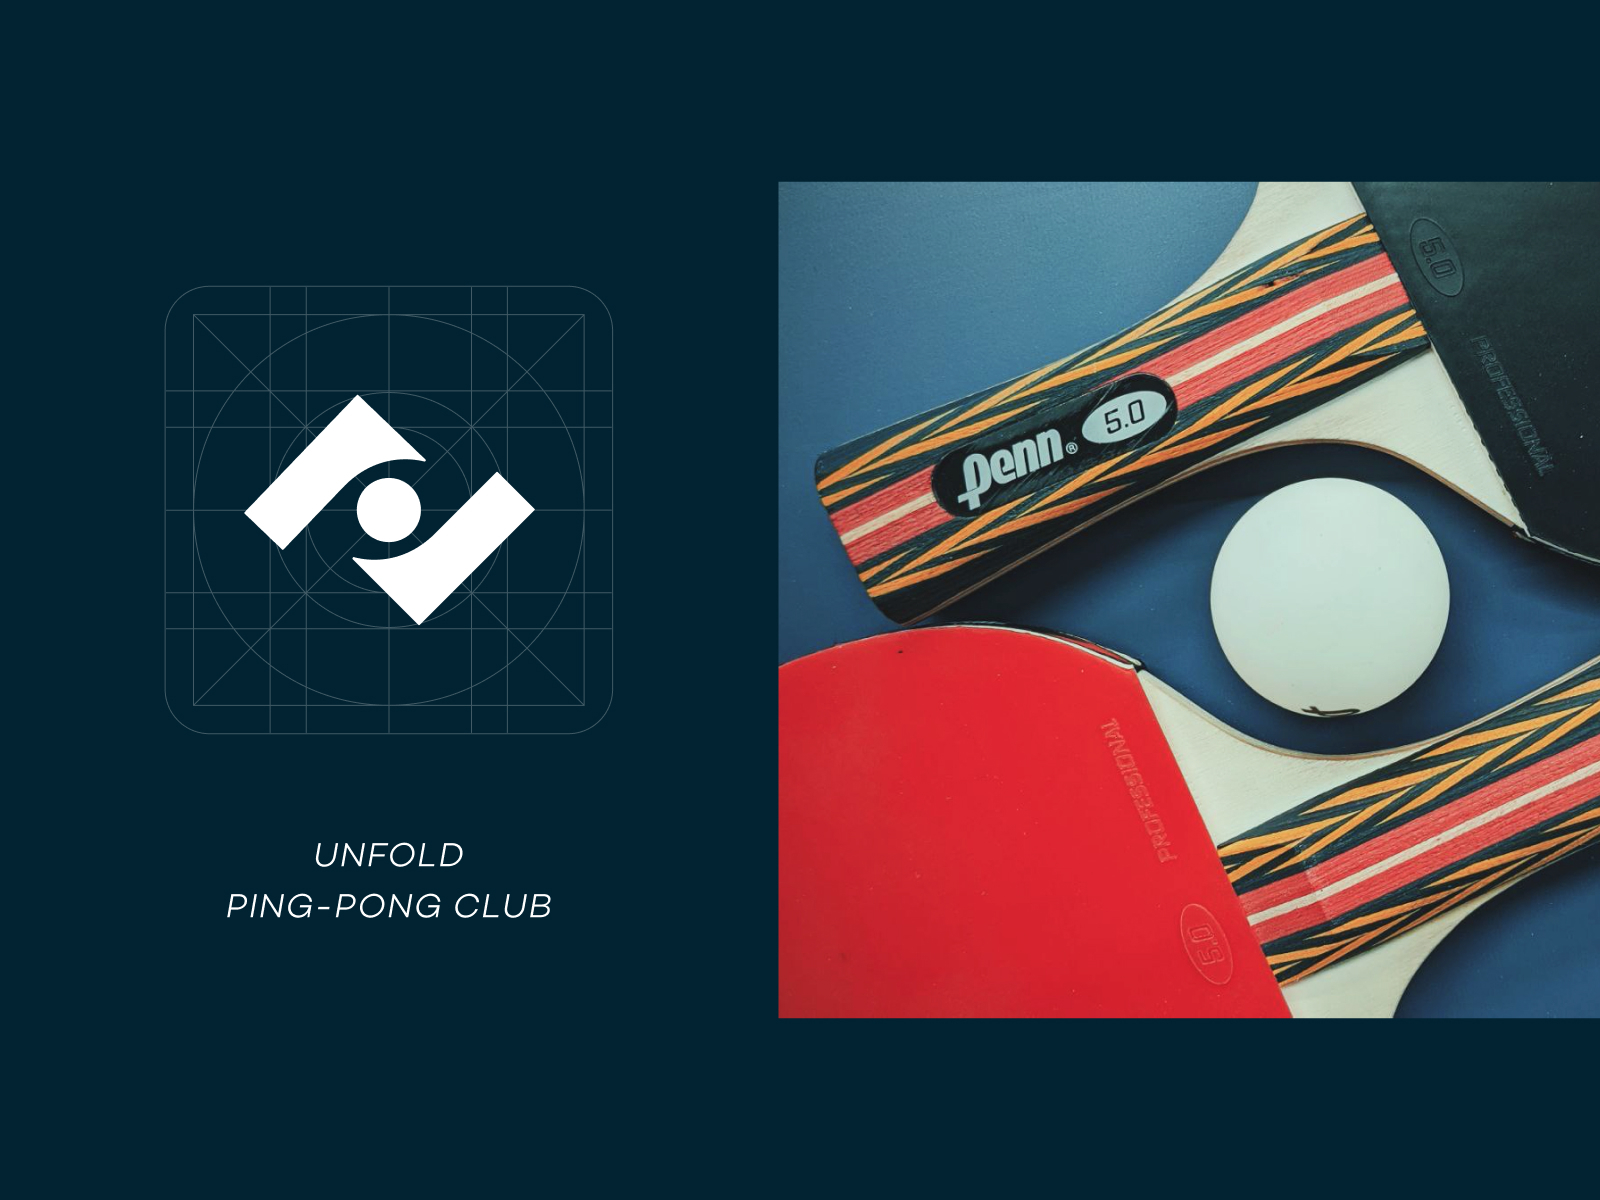 Ping-pong logo design icon symbol mark unfold game paddle rackets table tennis tennis ping pong logo concept fun branding logo